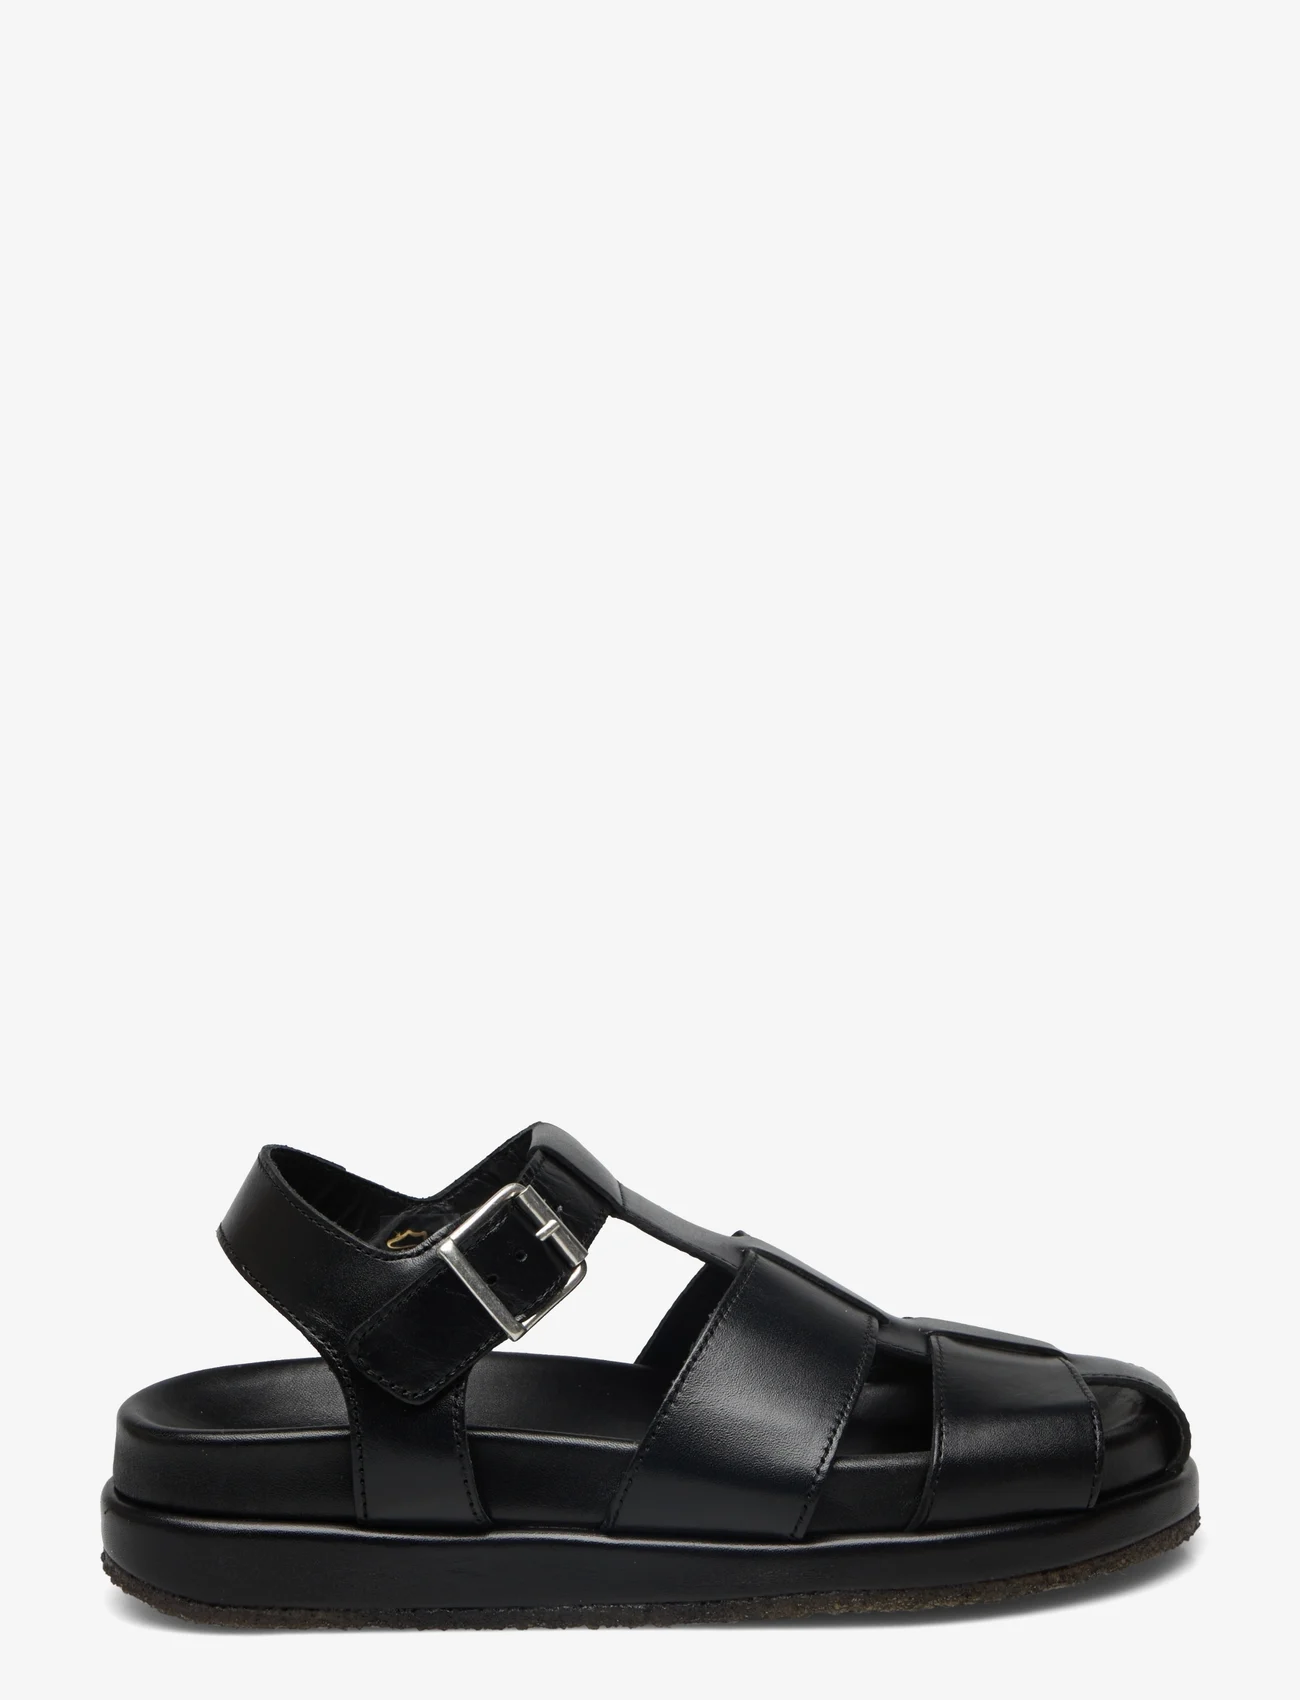 ANGULUS - Sandals - flat - open toe - op - flate sandaler - 1604/1785 black - 1